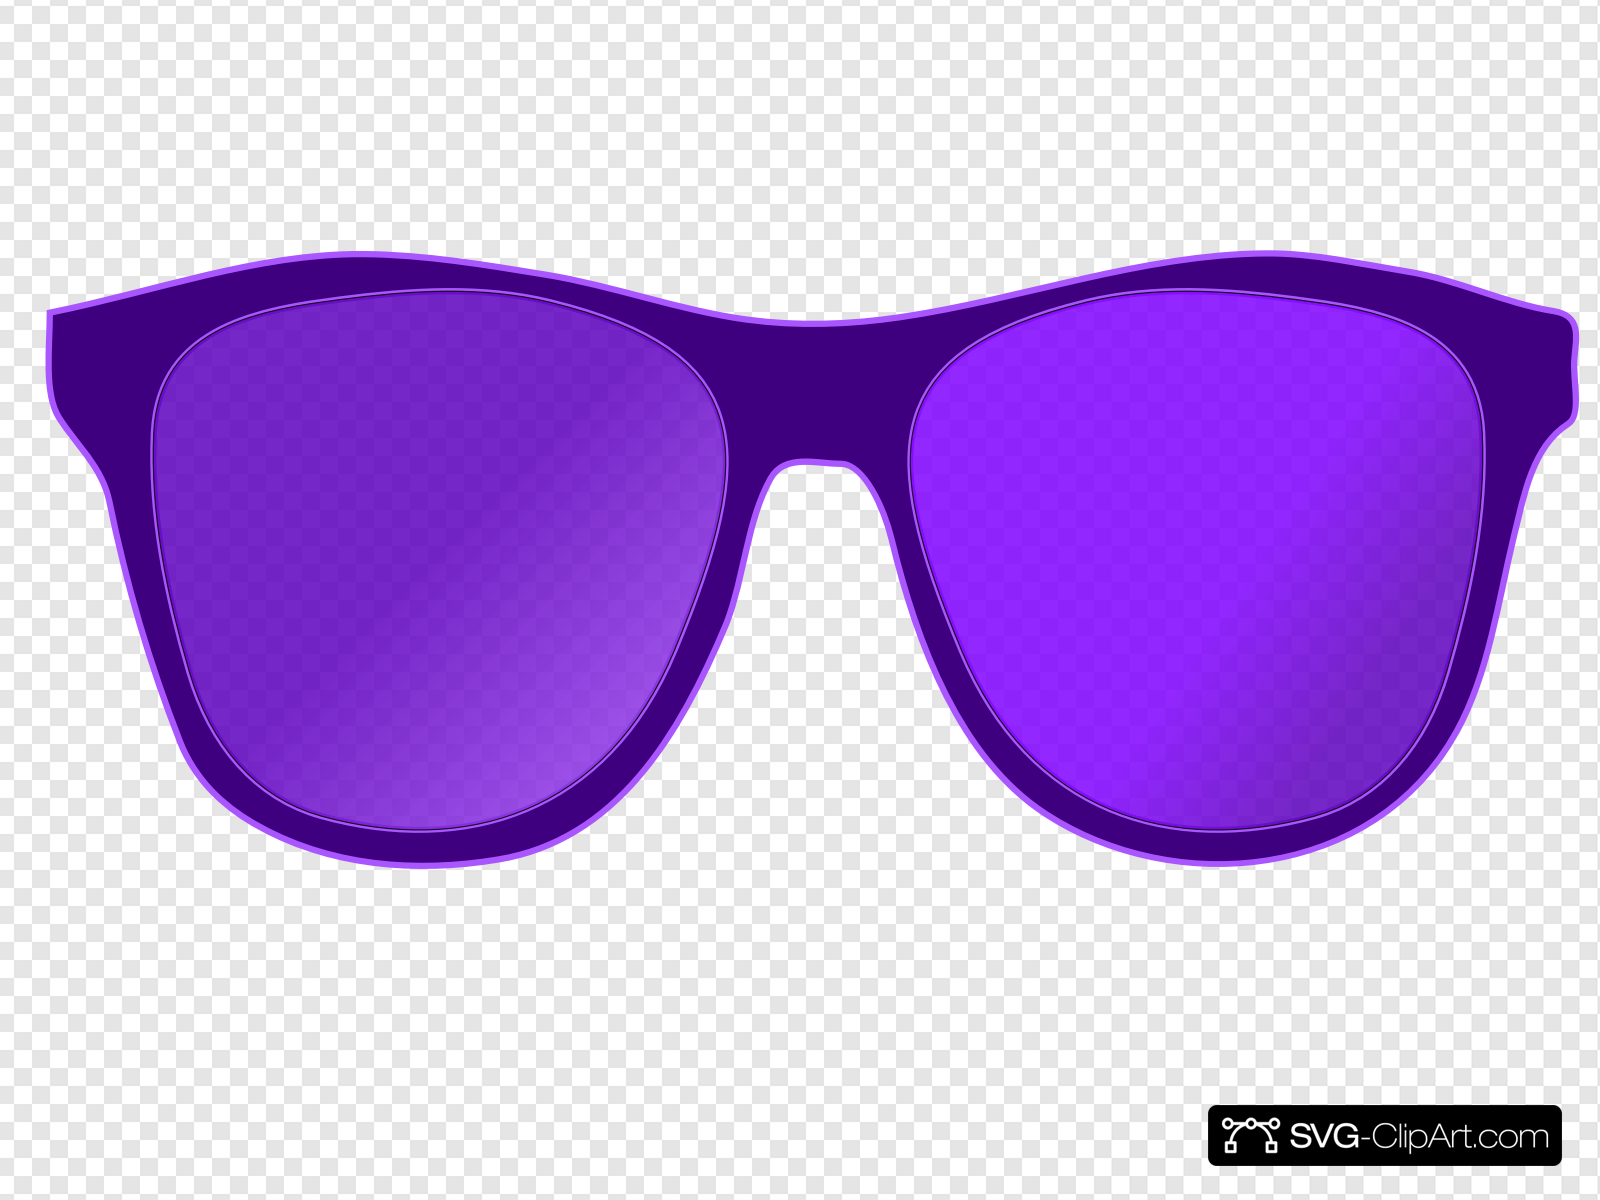 eyeglasses clipart purple